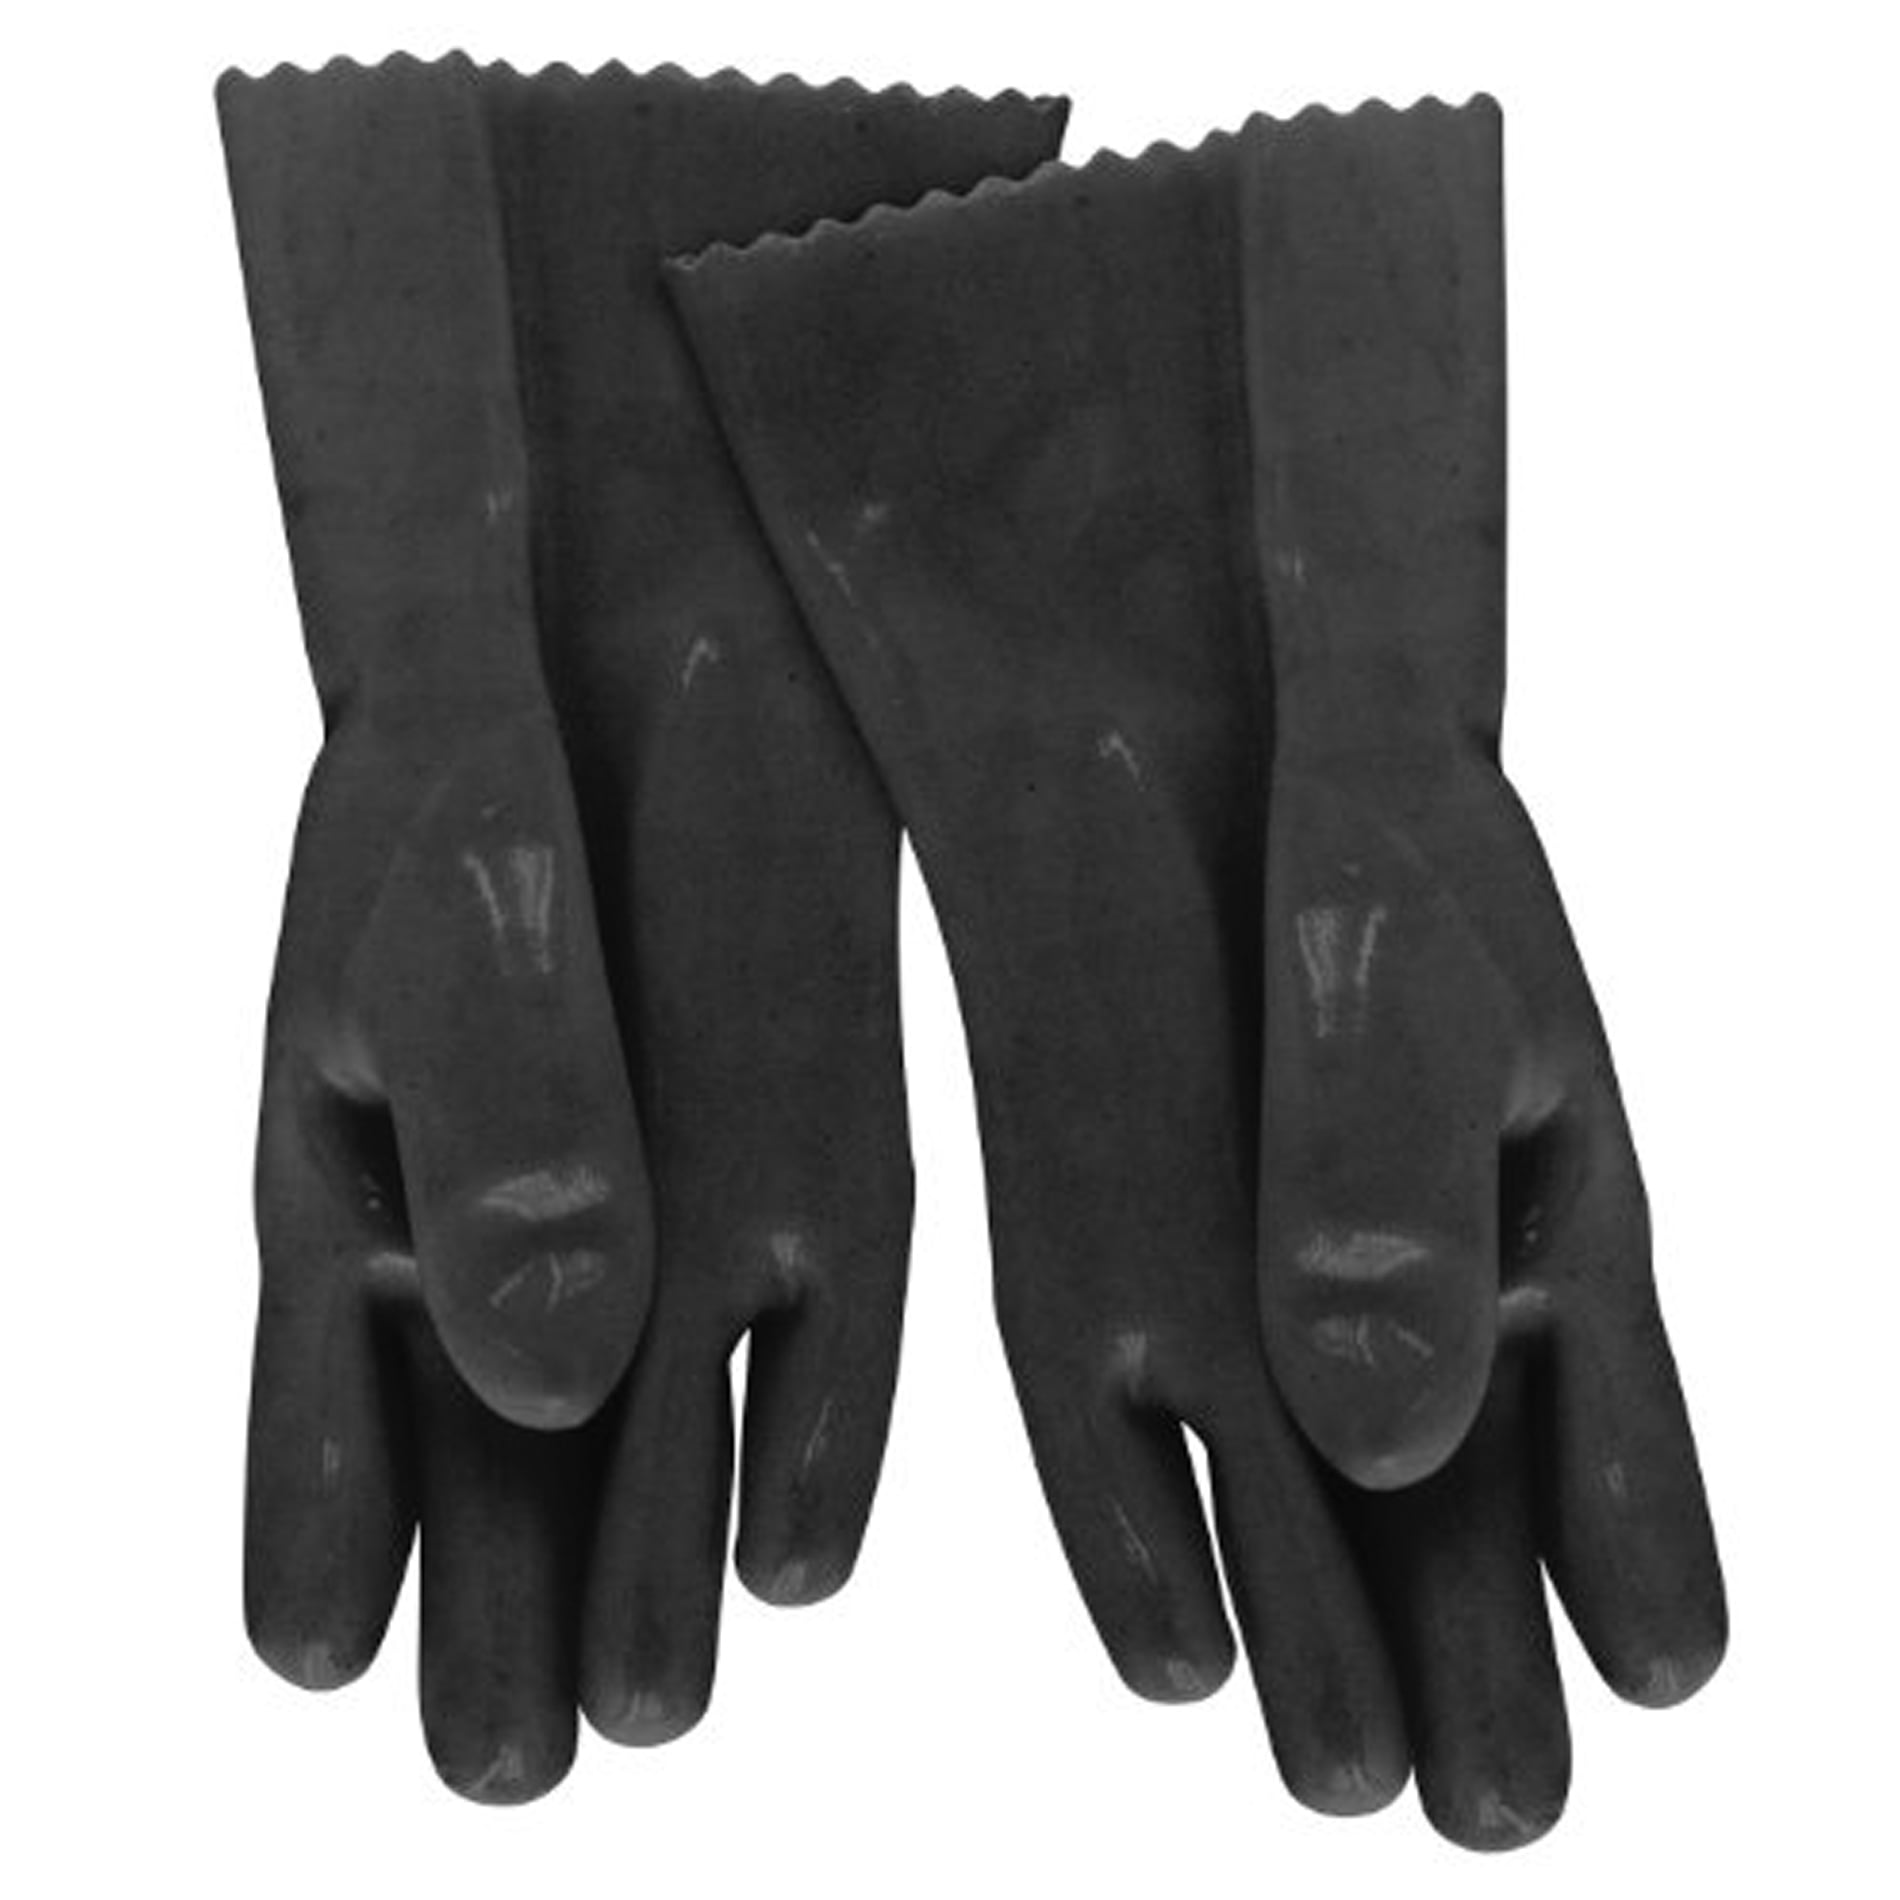 Insulated Food Handling Gloves Black Rubber Pair Mr Bar B Q 40111 